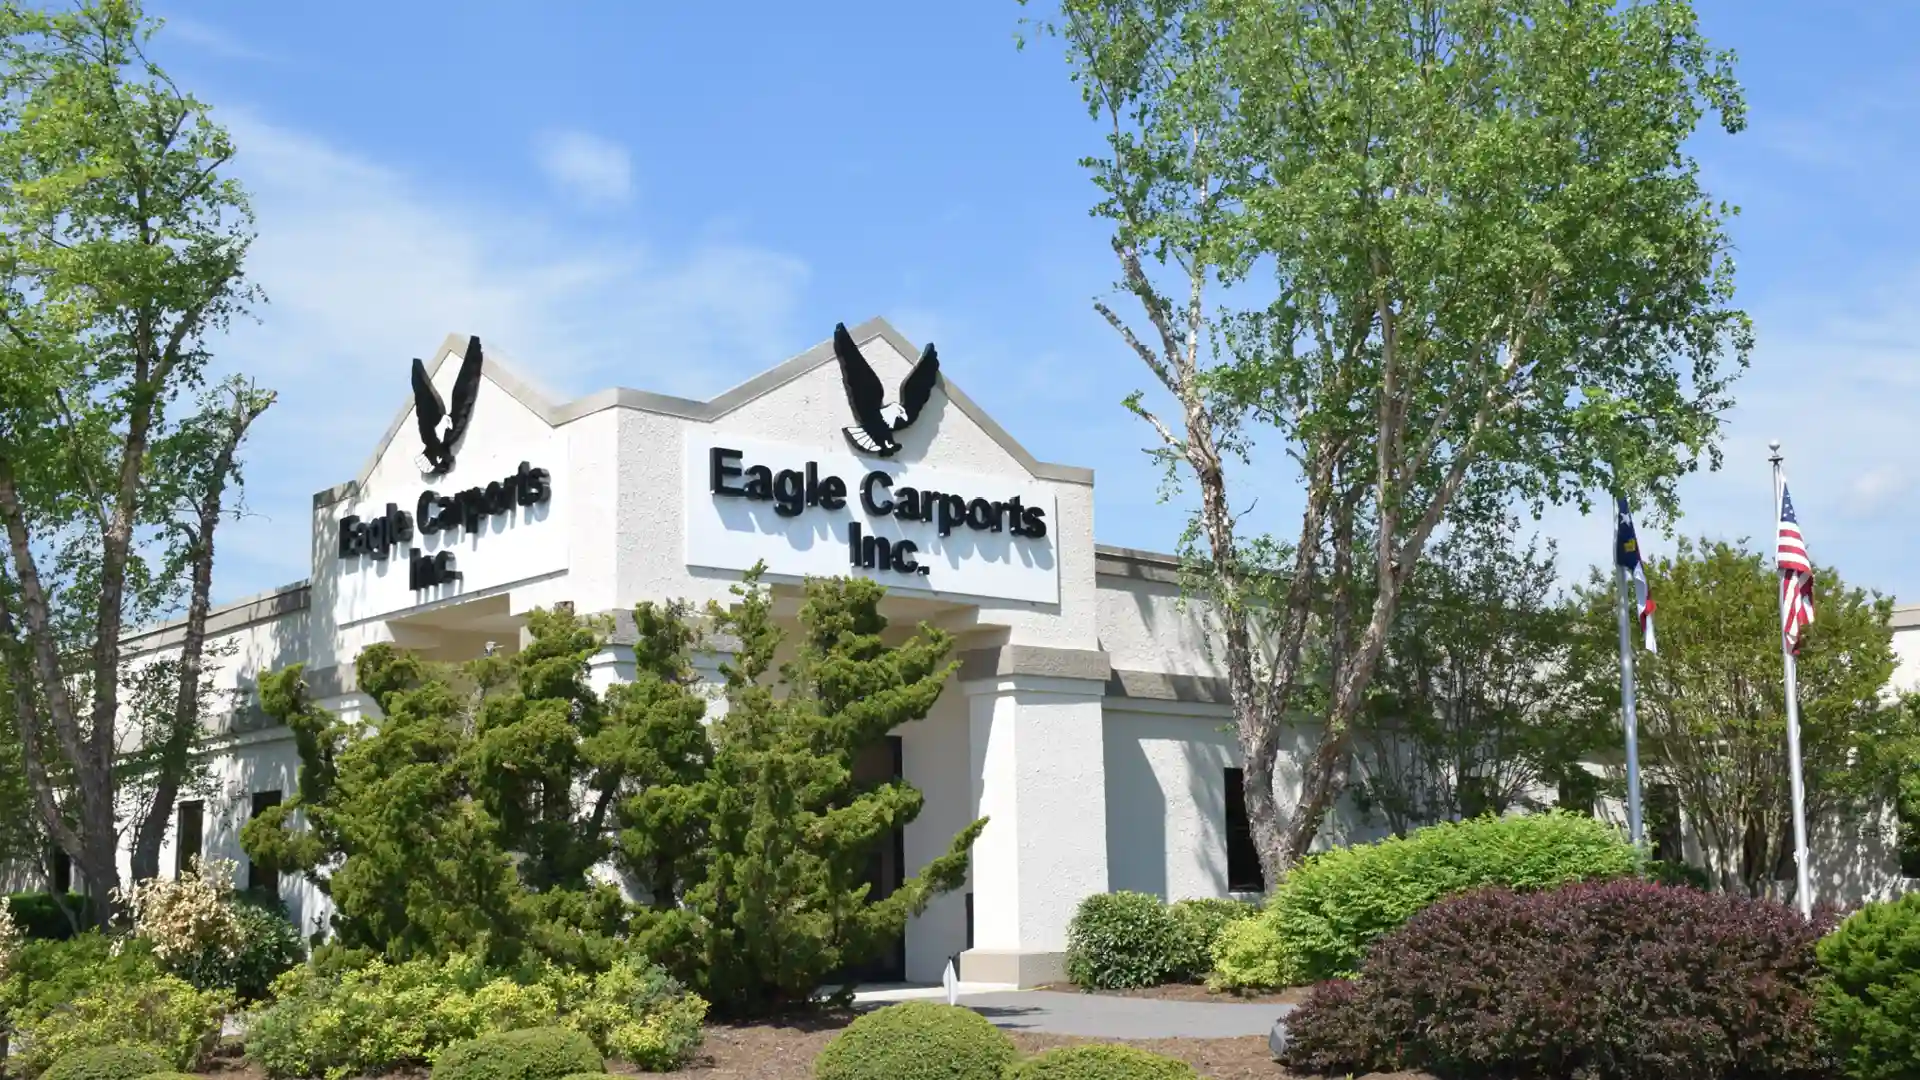 Eagle Carports building